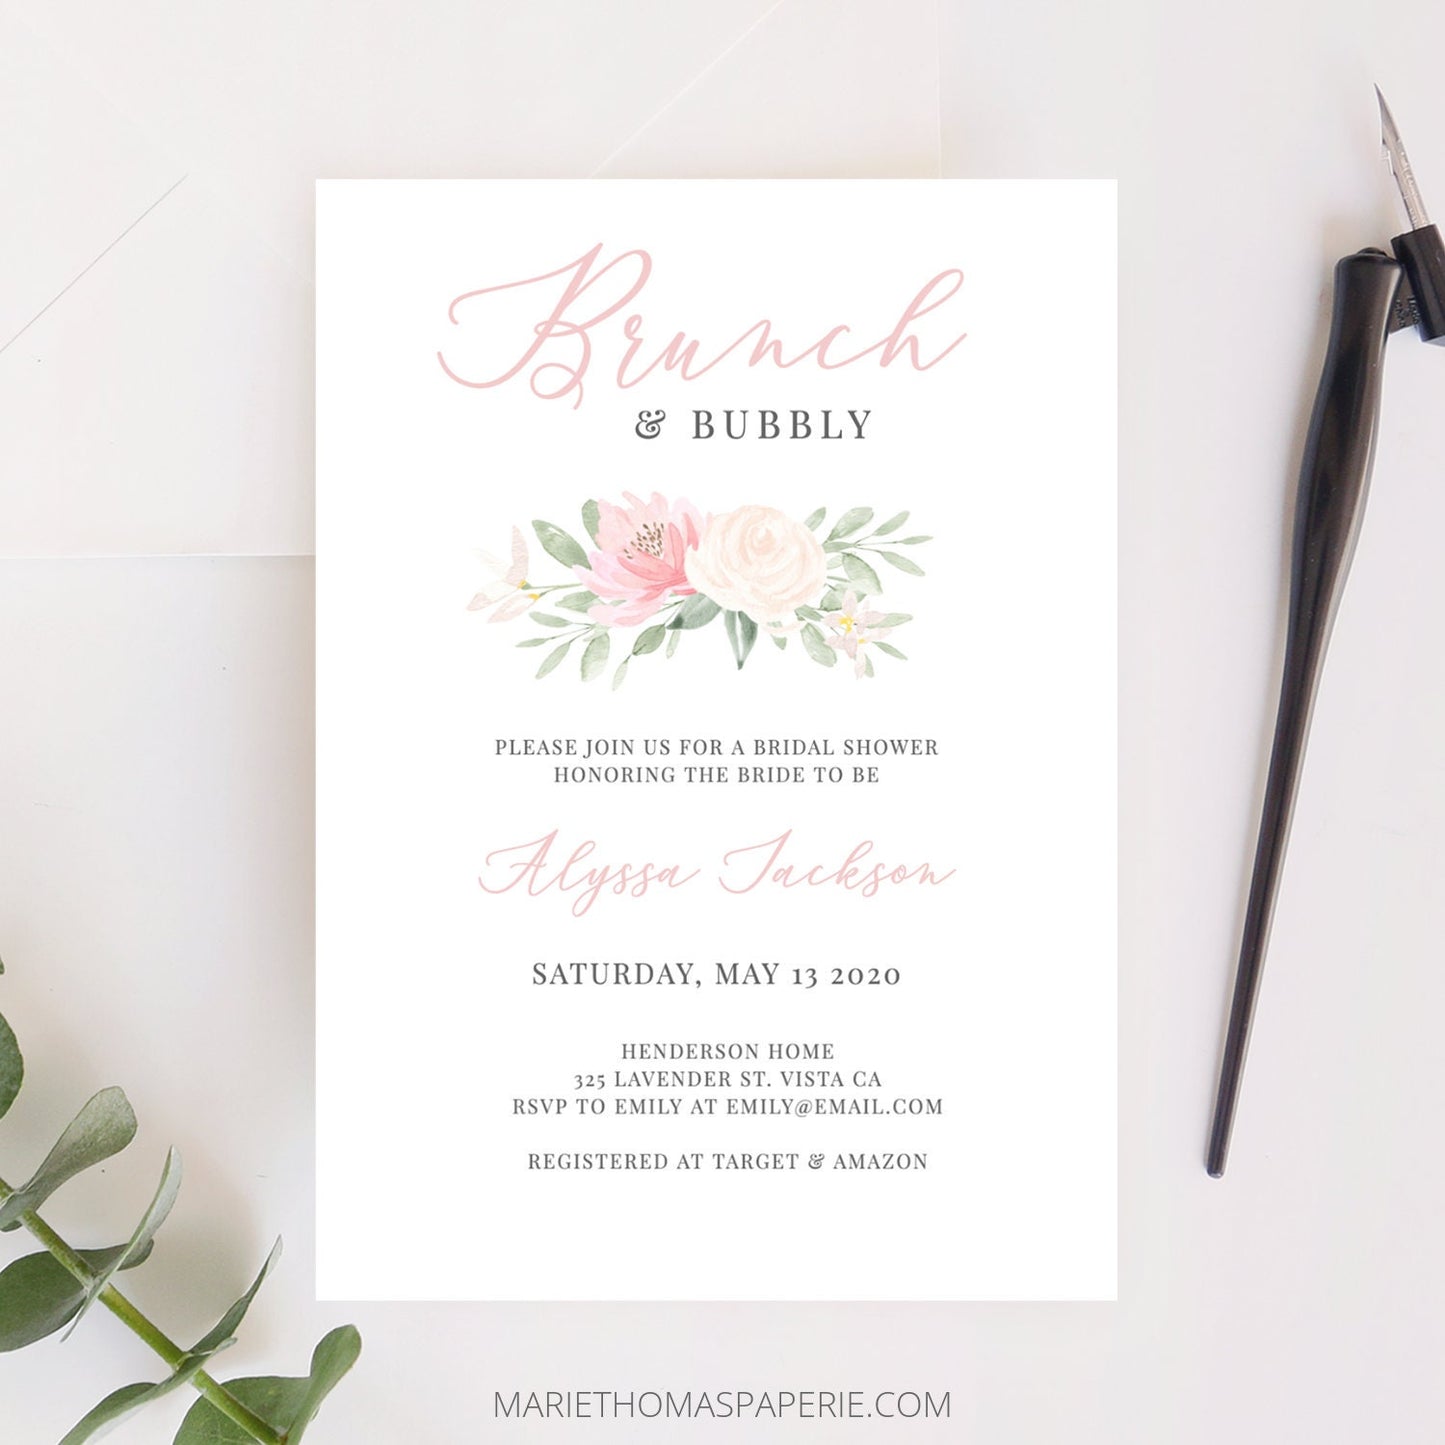 Editable Brunch and Bubbly Bridal Shower Invitation Blush Pink Floral Boho Bridal Shower Invite Template